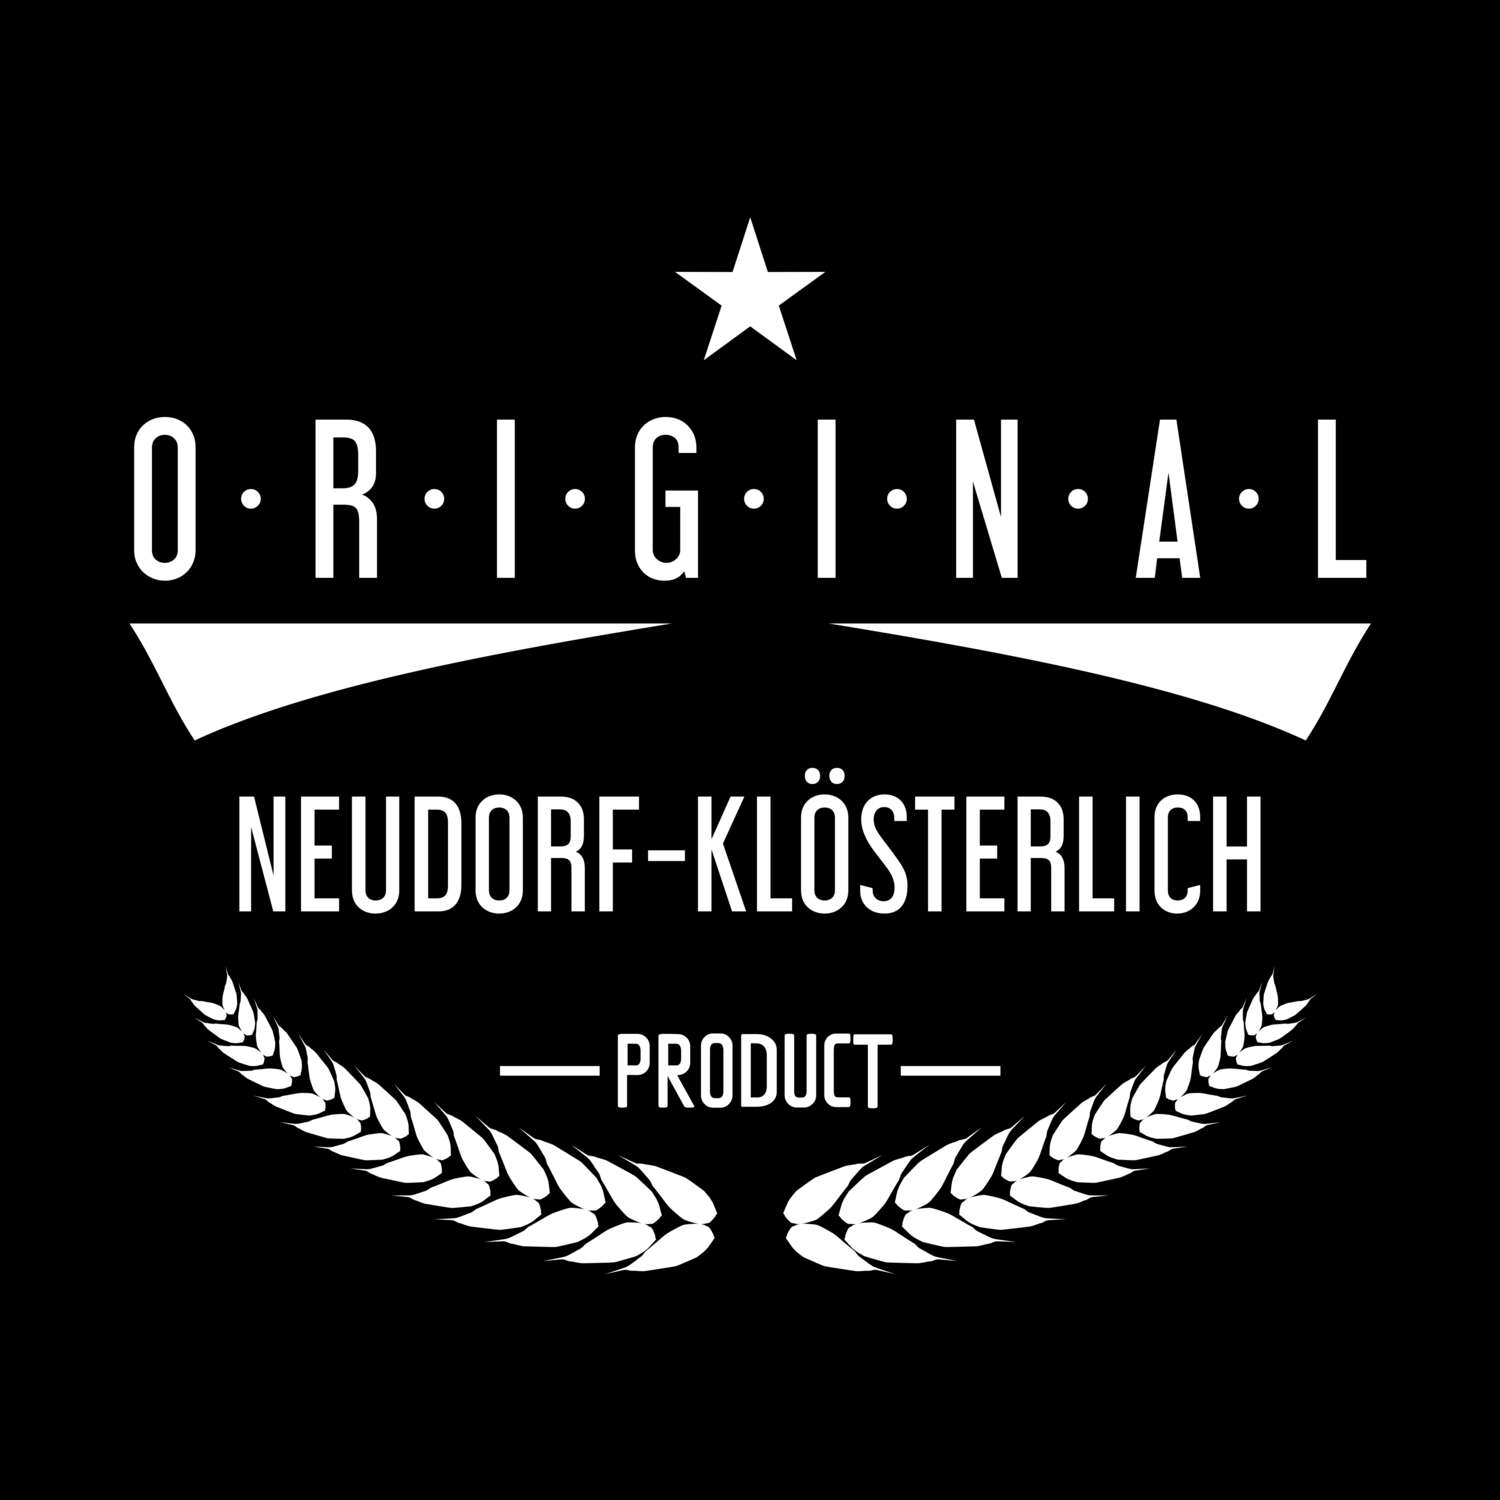 Neudorf-Klösterlich T-Shirt »Original Product«